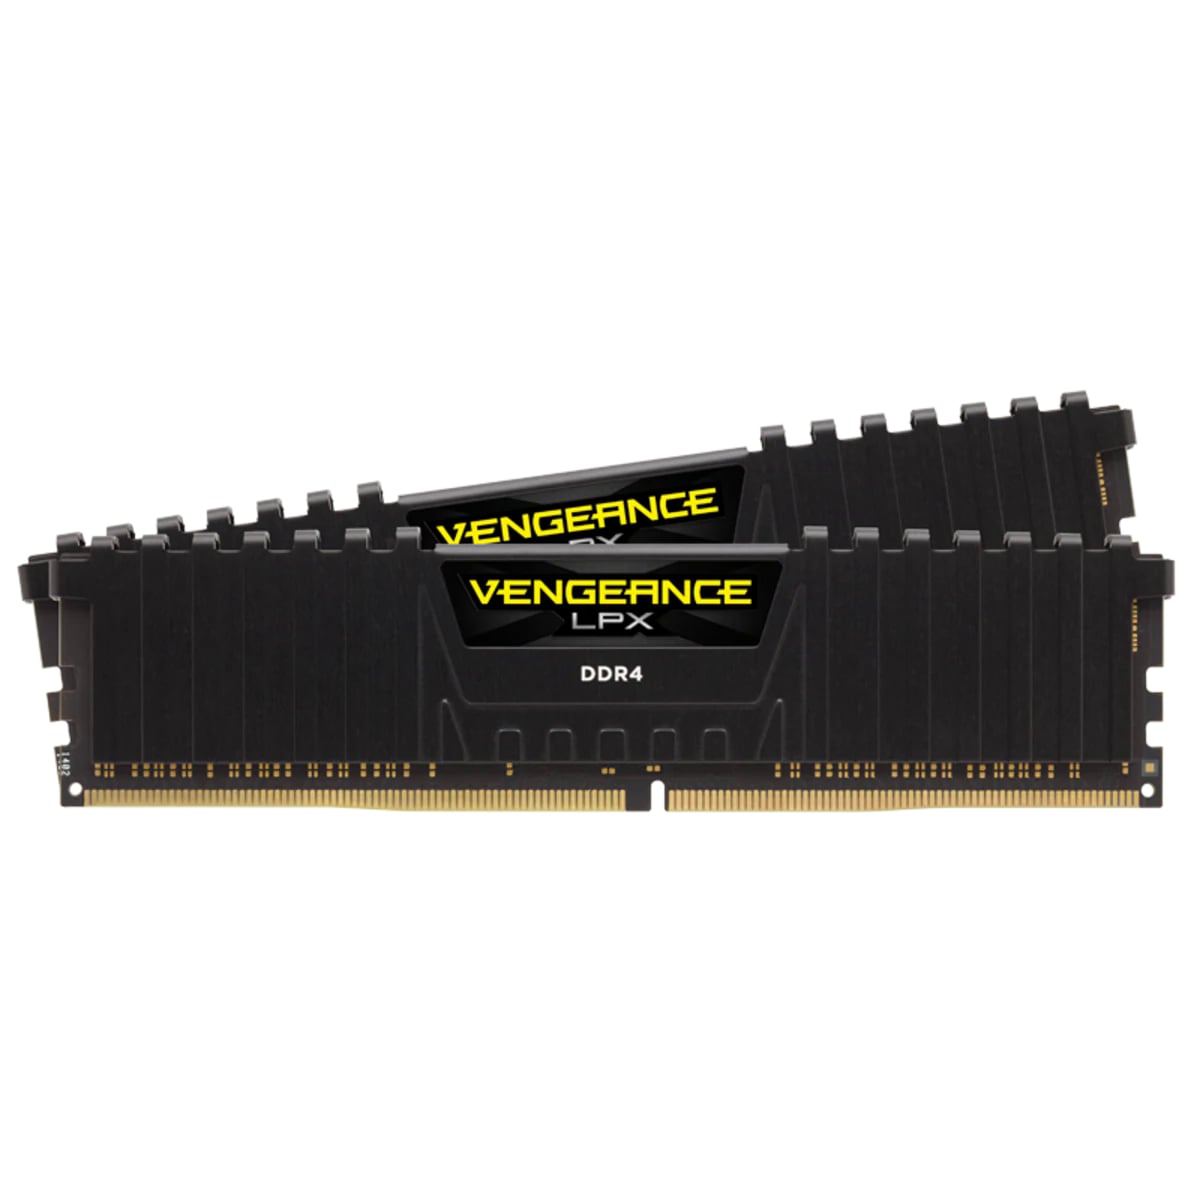 RAM CORSAIR VENGEANCE LPX 16GB (2x8GB) DDR4 2400MHz - CMK16GX4M2A2400C14 - songphuong.vn